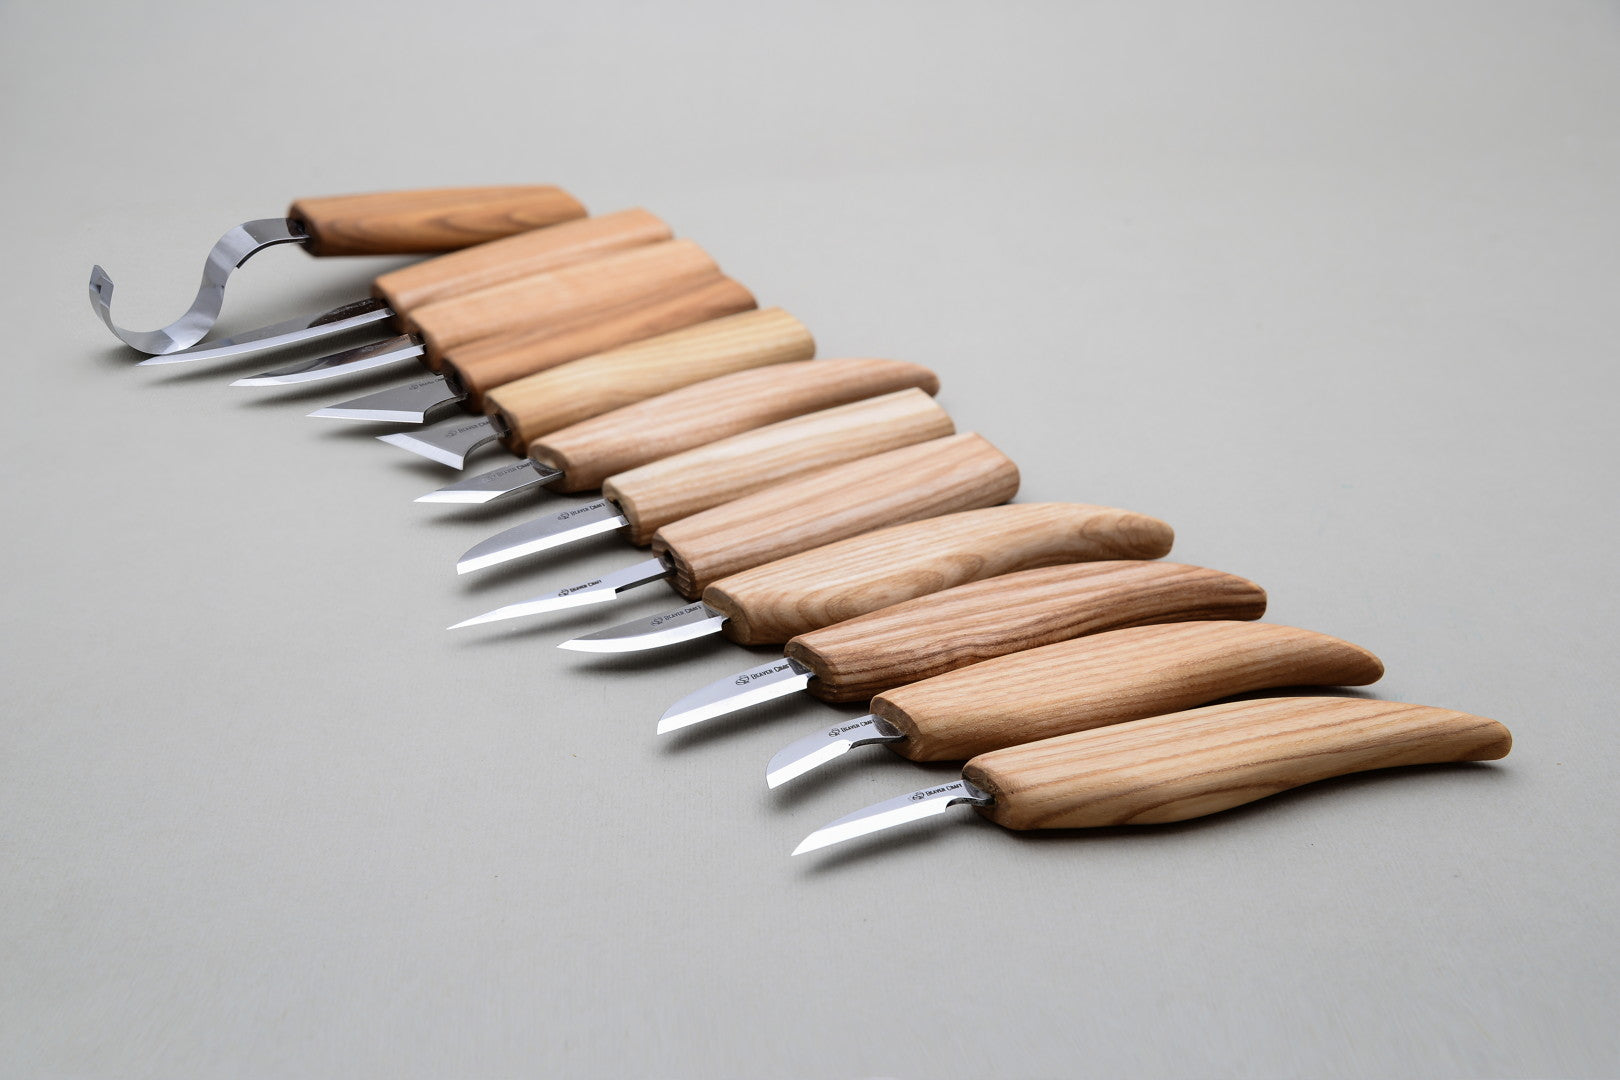 Knife blades for wood carving quality sale online - BeaverCraft